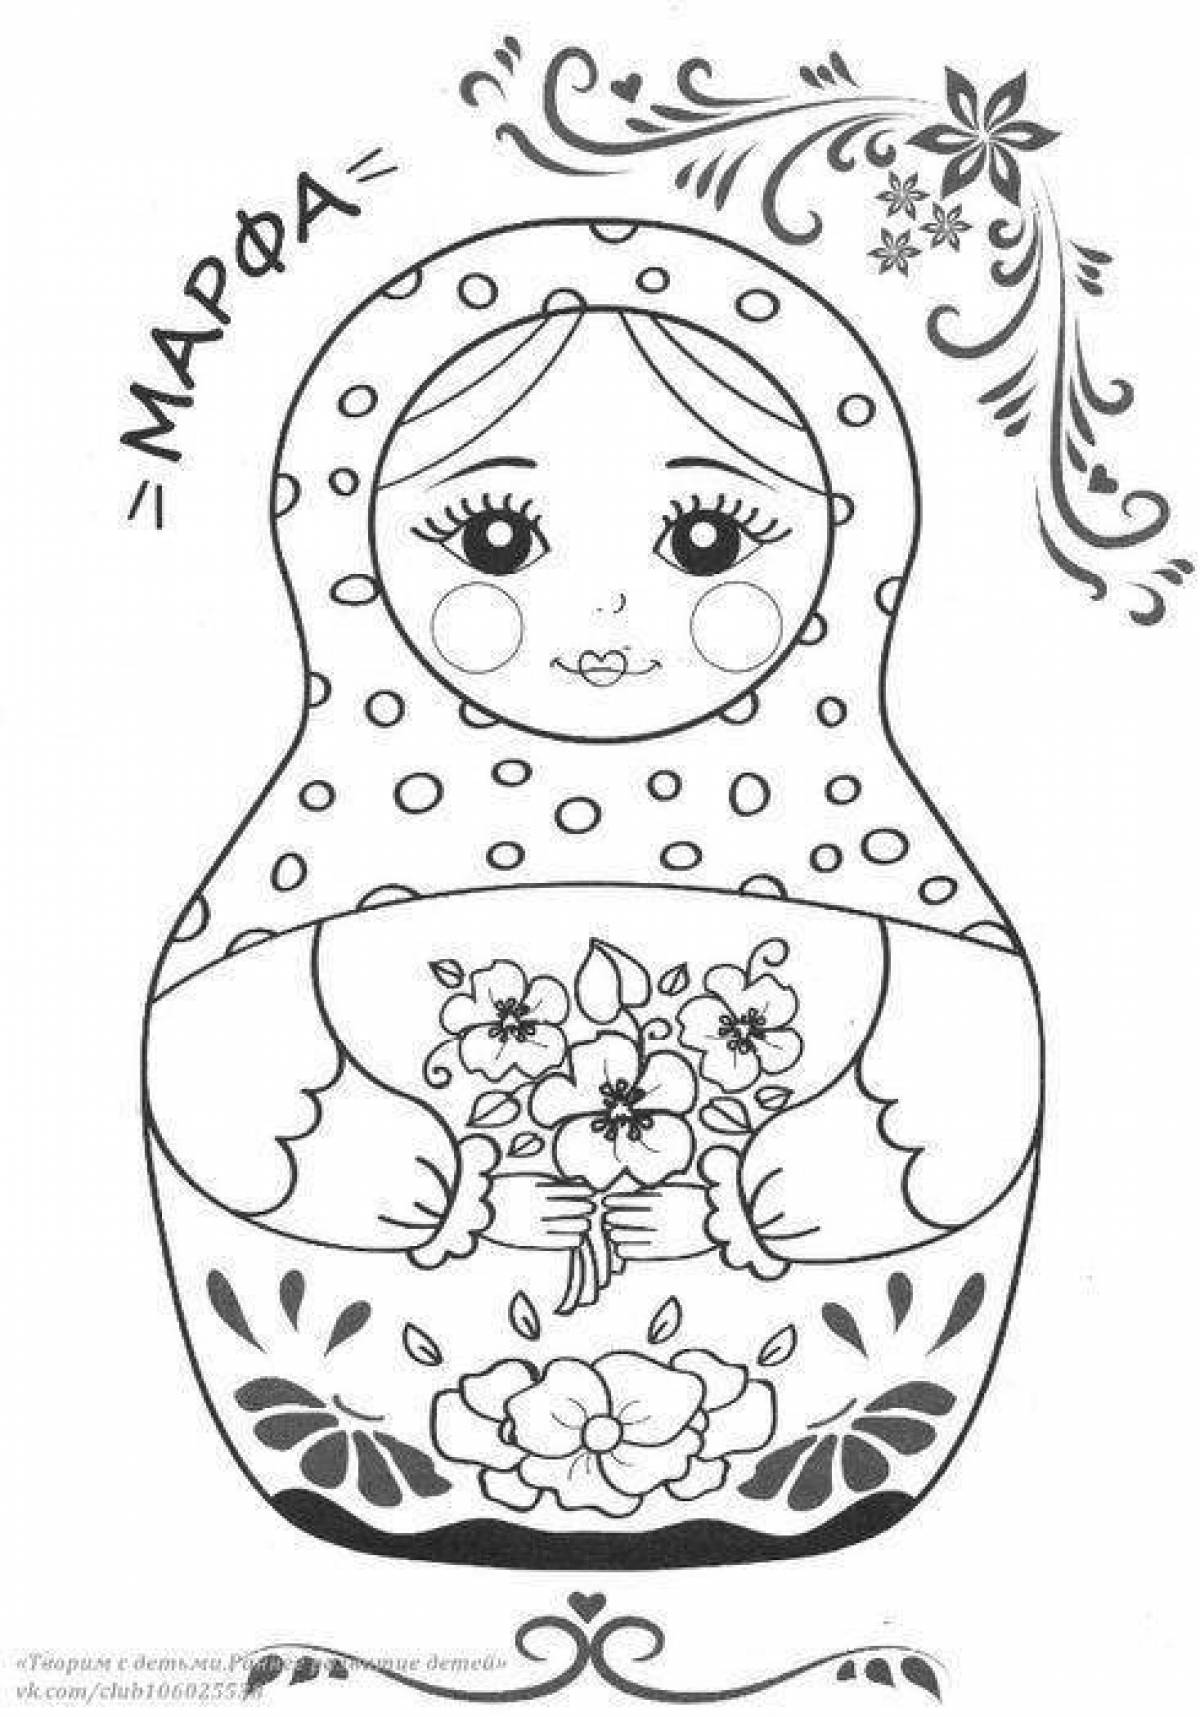 Charming matryoshka coloring book for kids